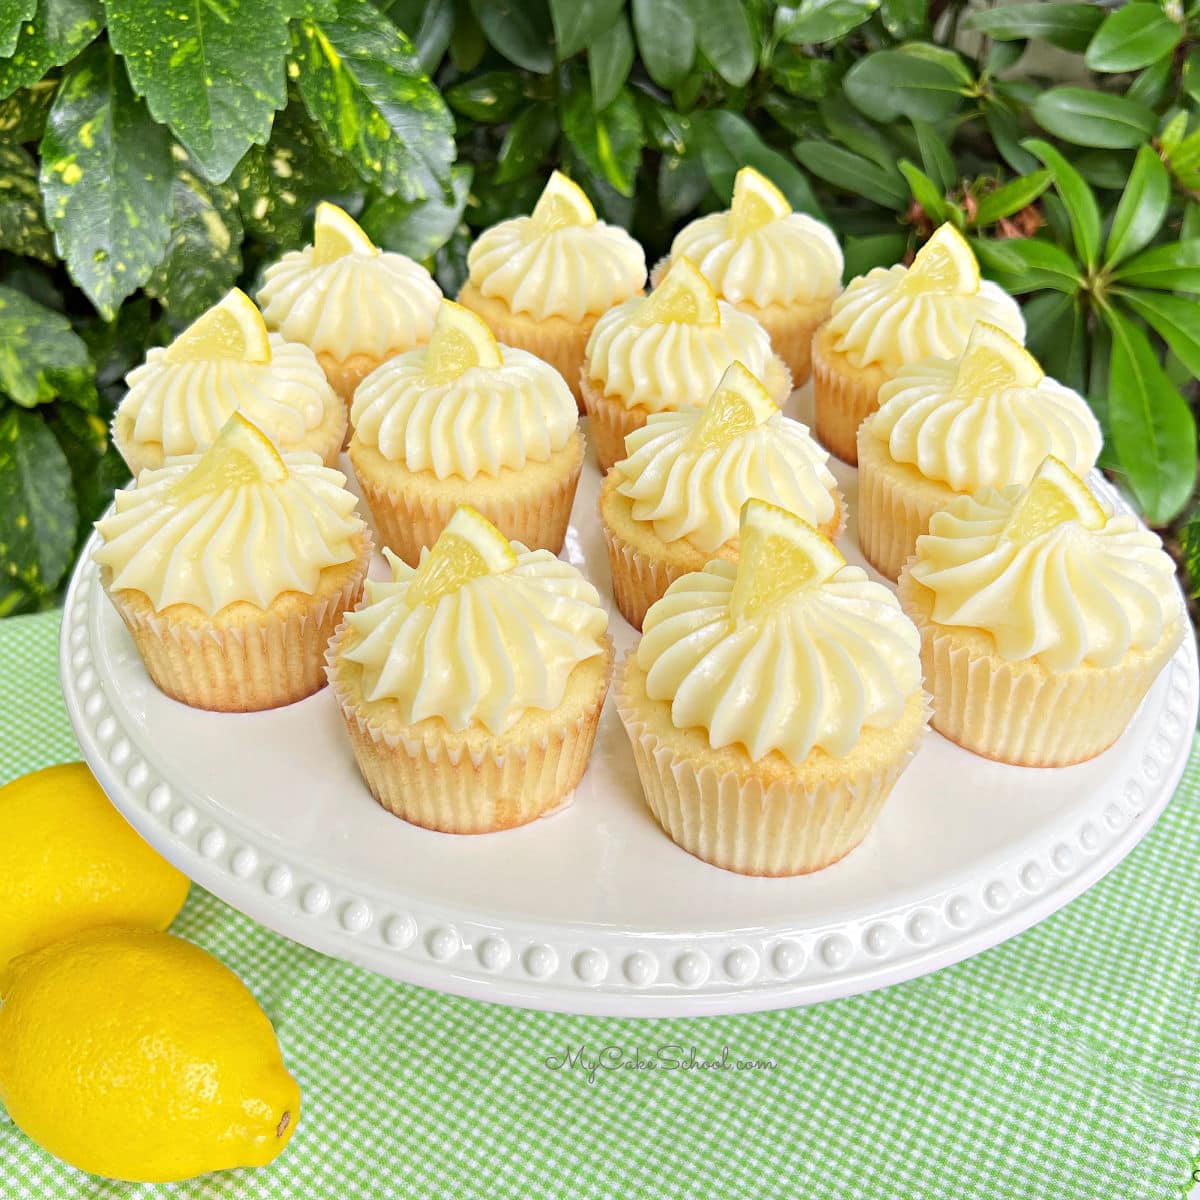 Lemon Cupcakes with Lemon Cream Cheese Frosting on white pedestal